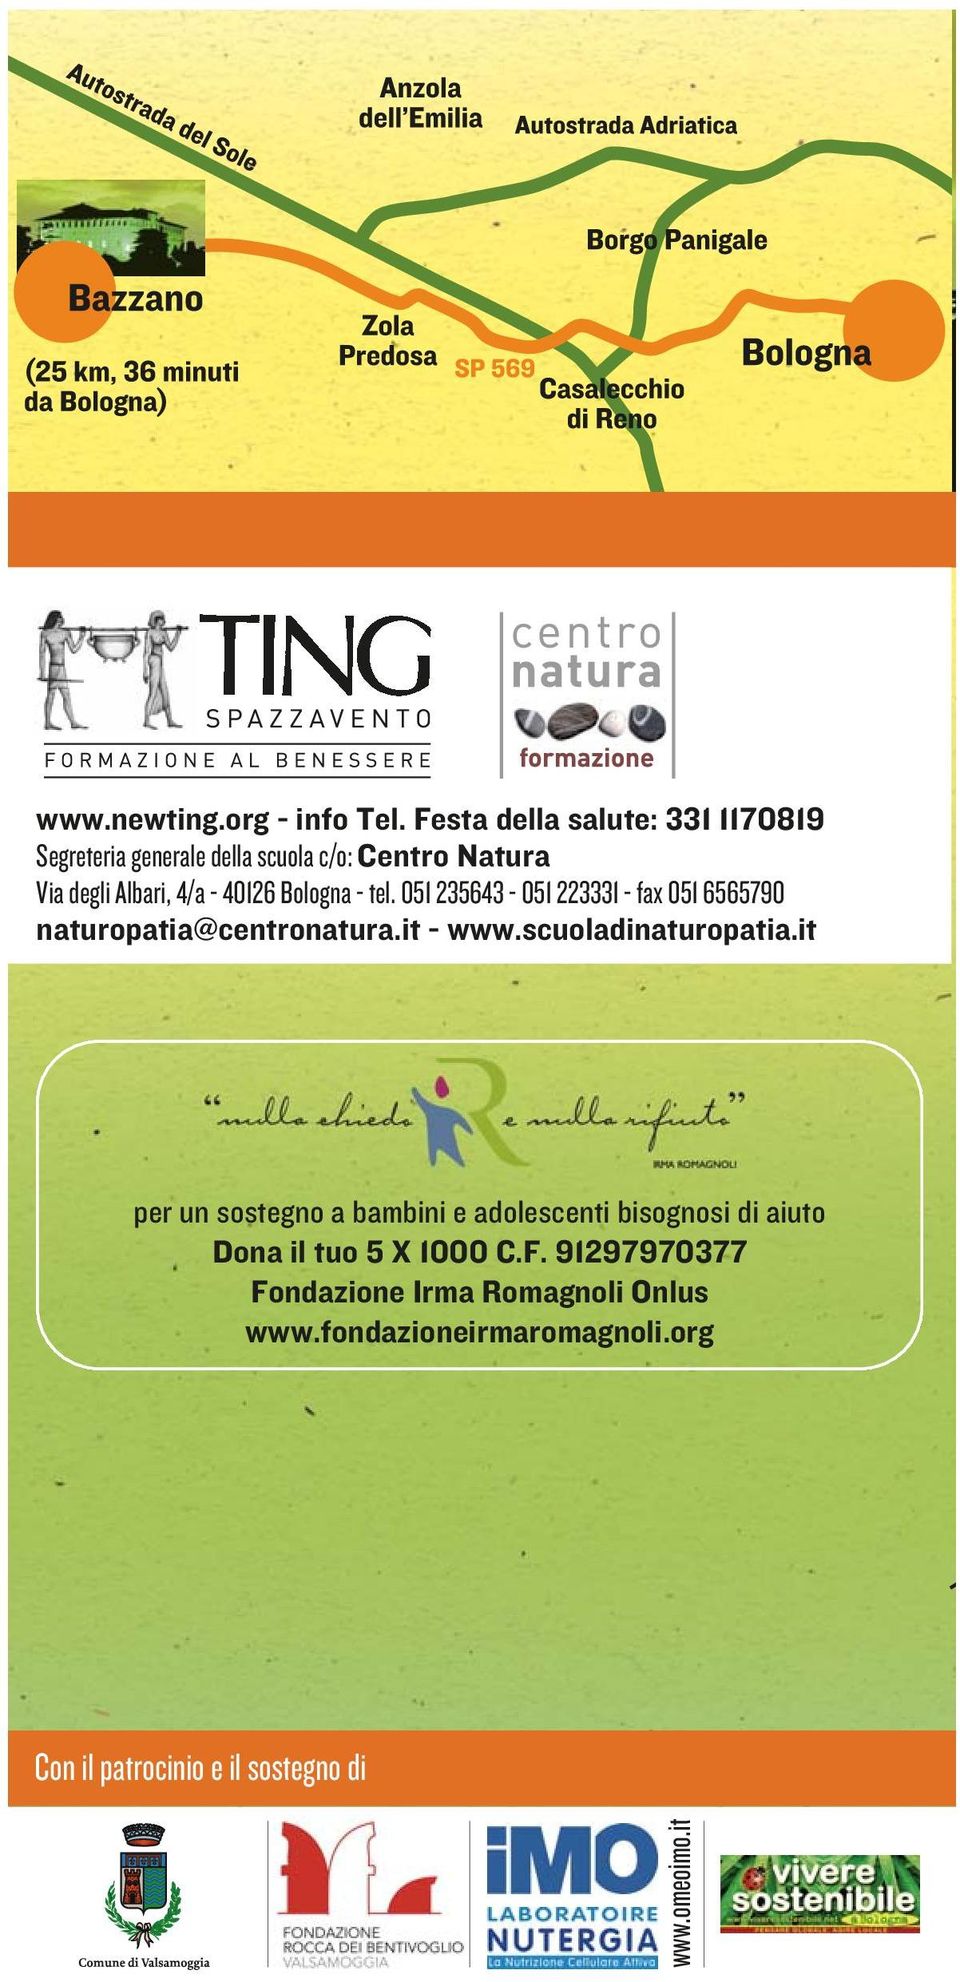 Bologna - tel. 051 235643-051 223331 - fax 051 6565790 naturopatia@centronatura.it - www.scuoladinaturopatia.